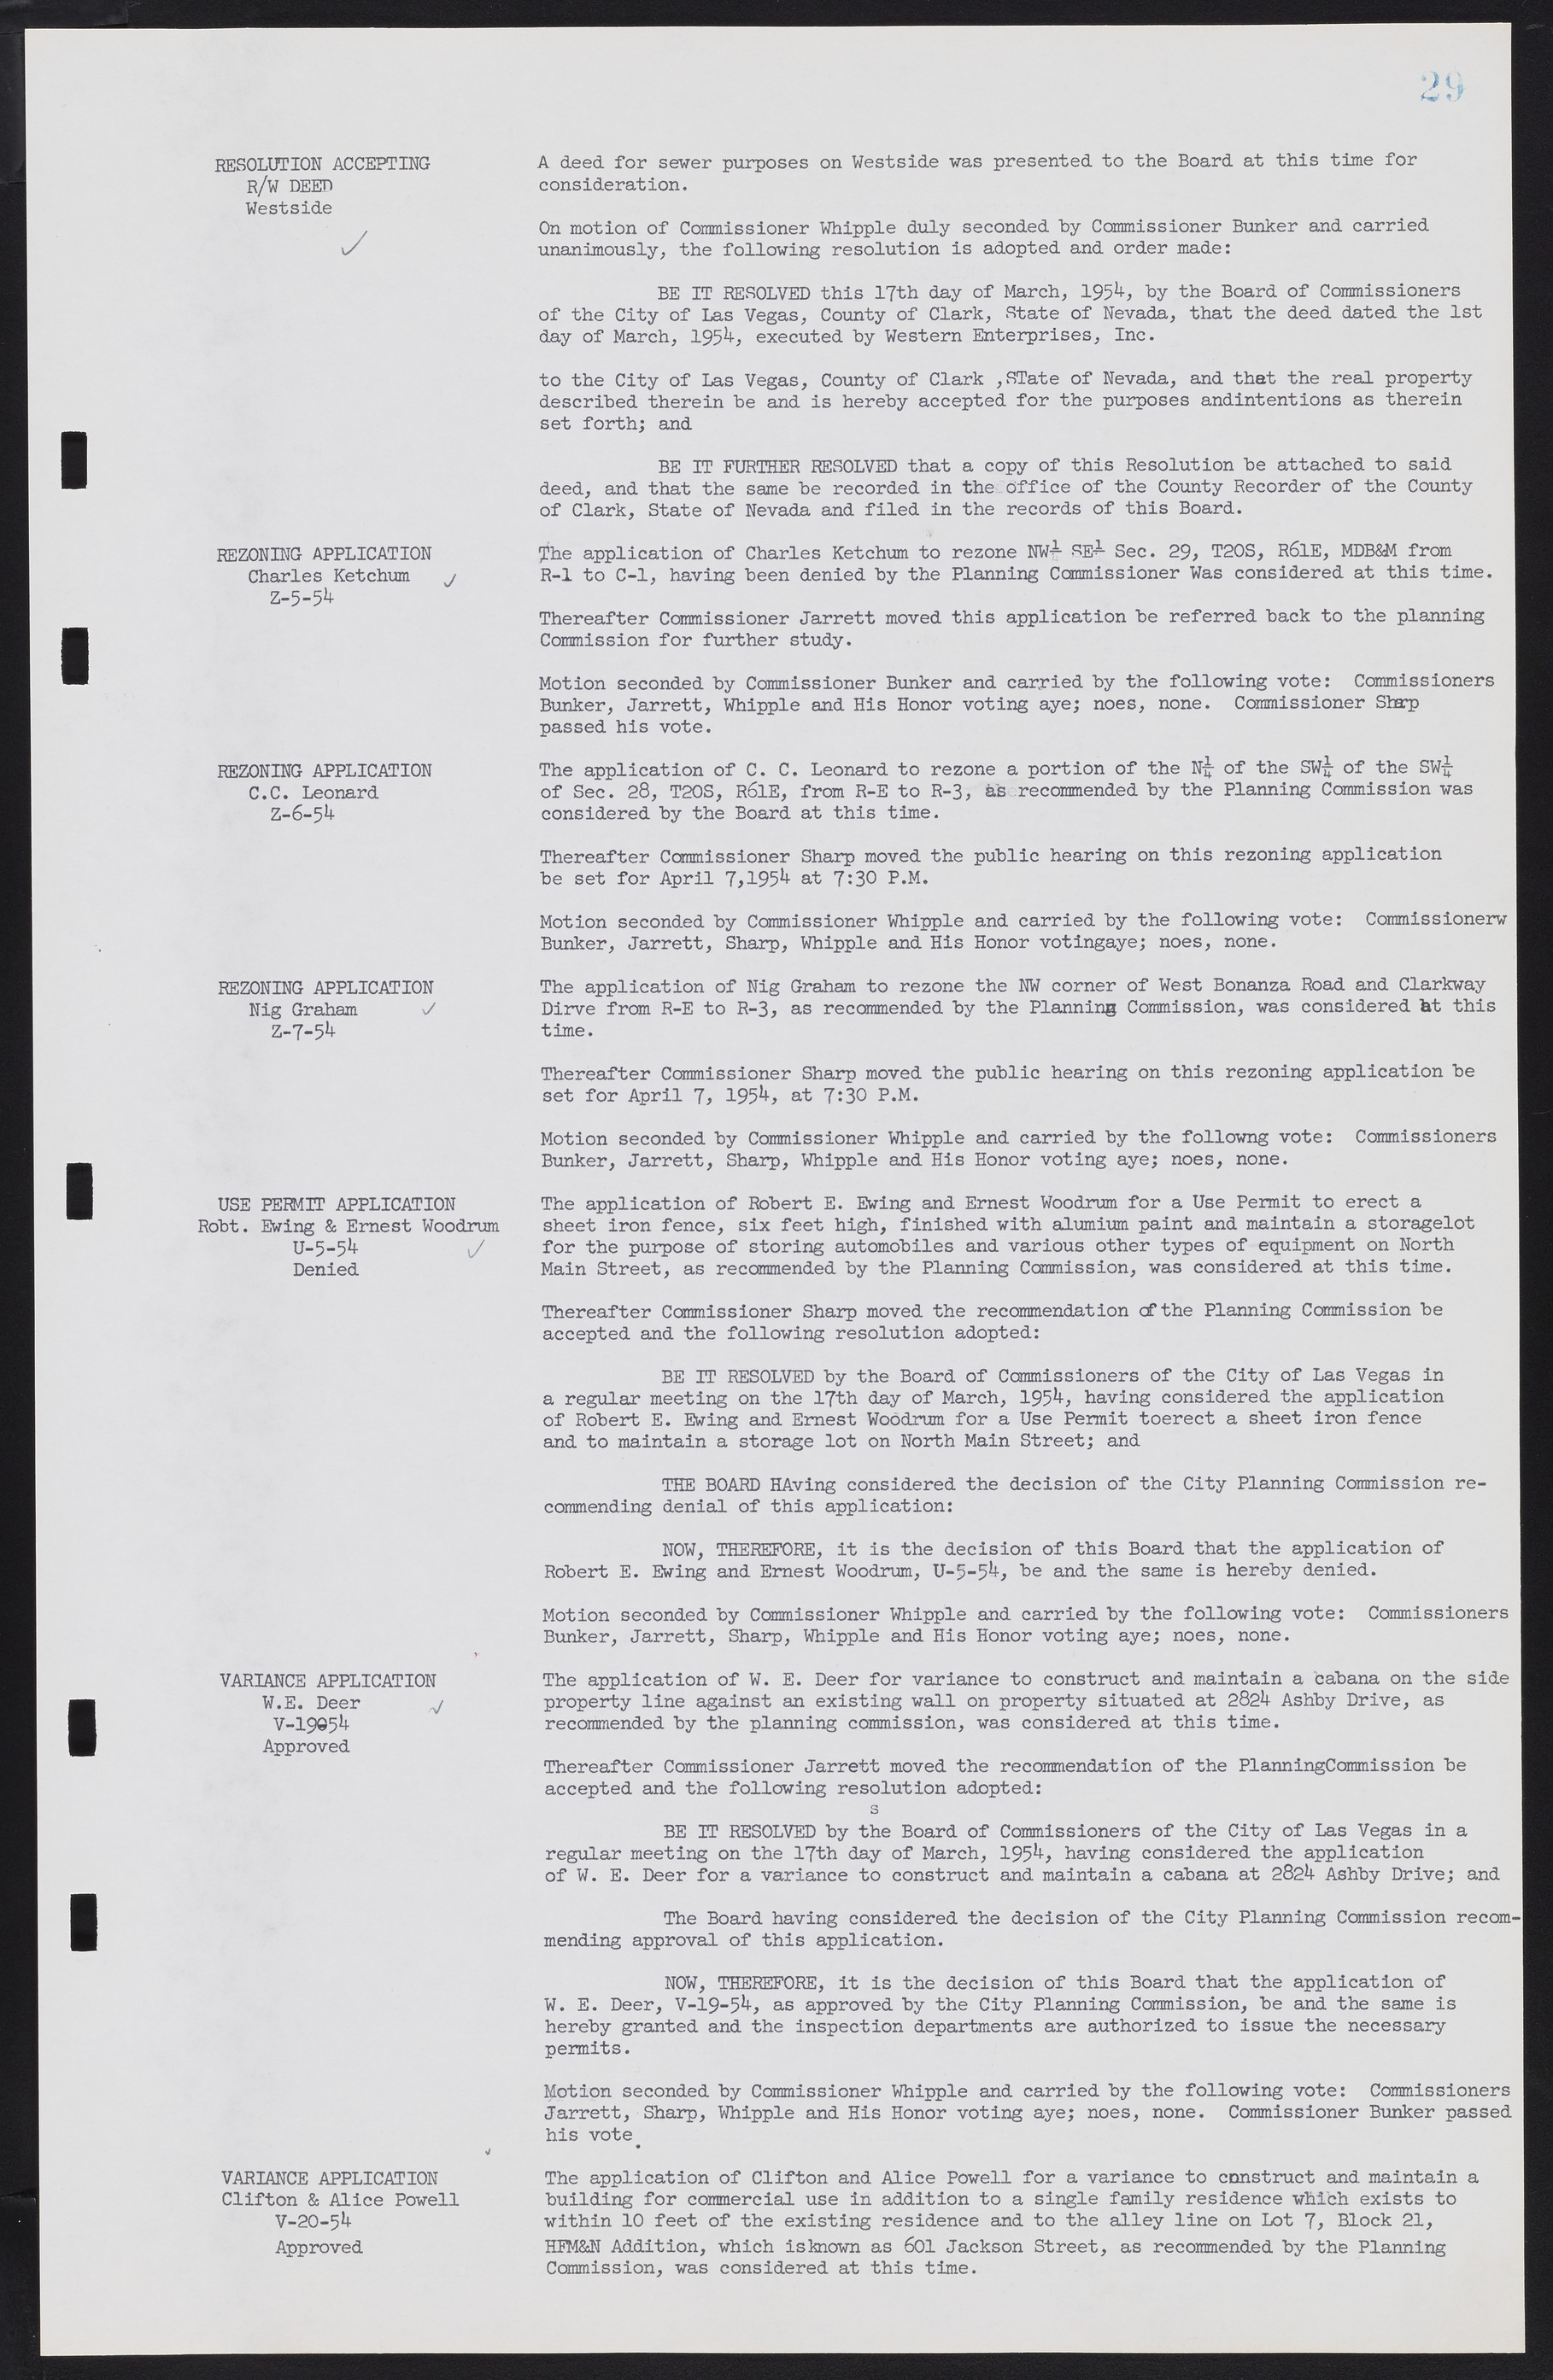 Las Vegas City Commission Minutes, February 17, 1954 to September 21, 1955, lvc000009-33